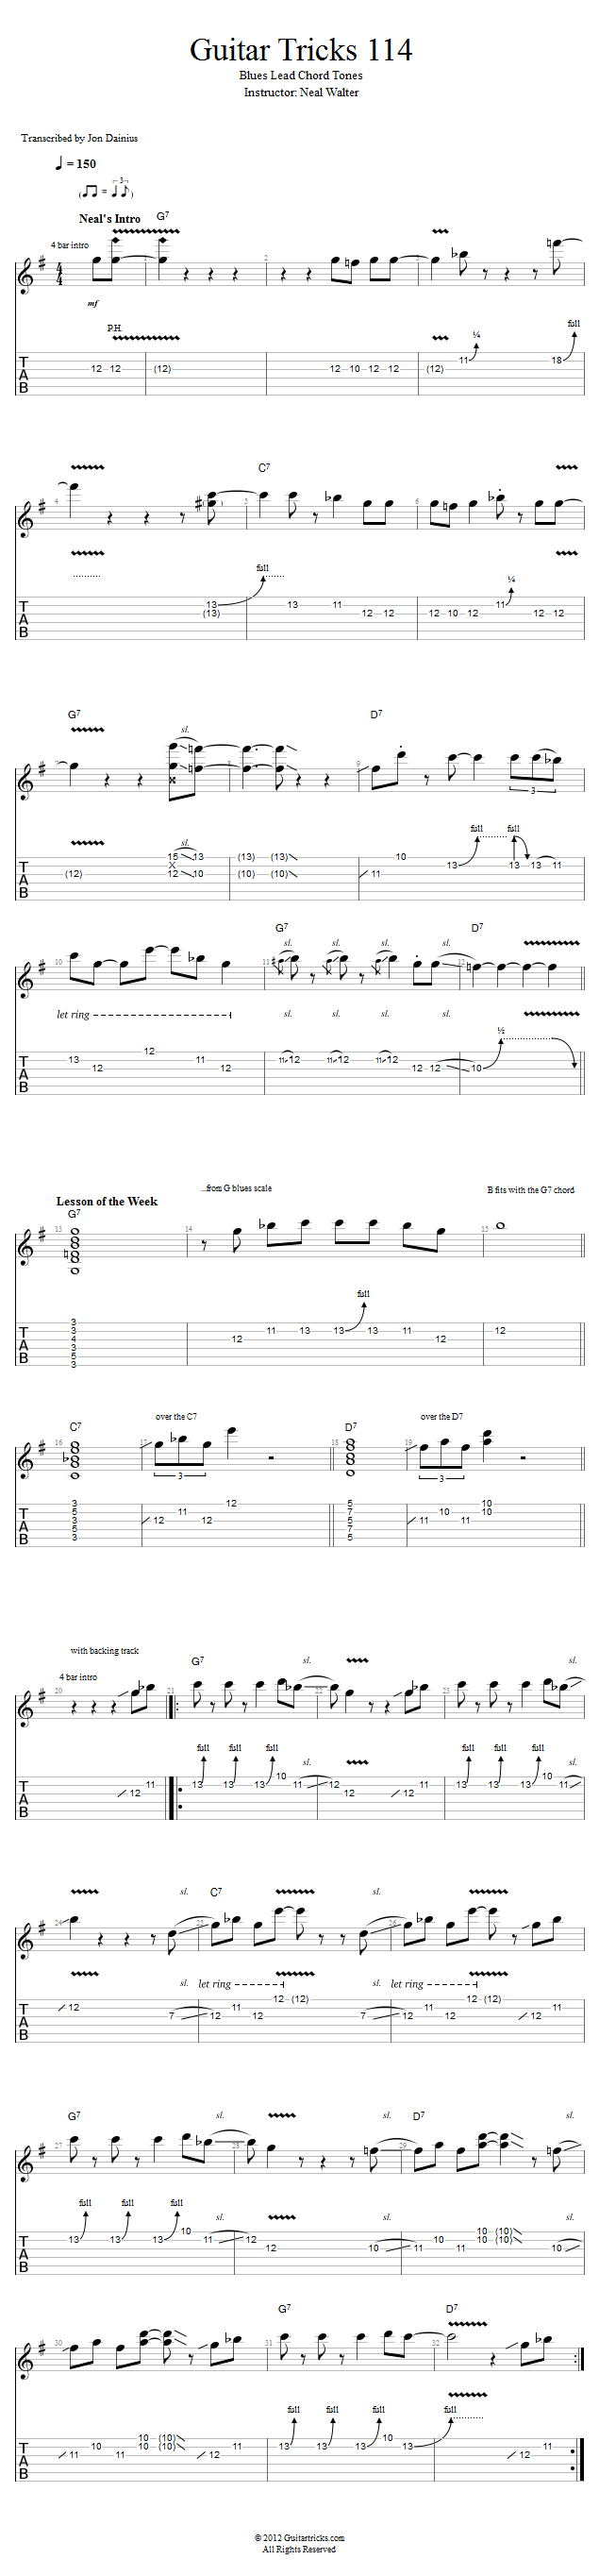 Guitar Tricks 114: Blues Lead Chord Tones song notation